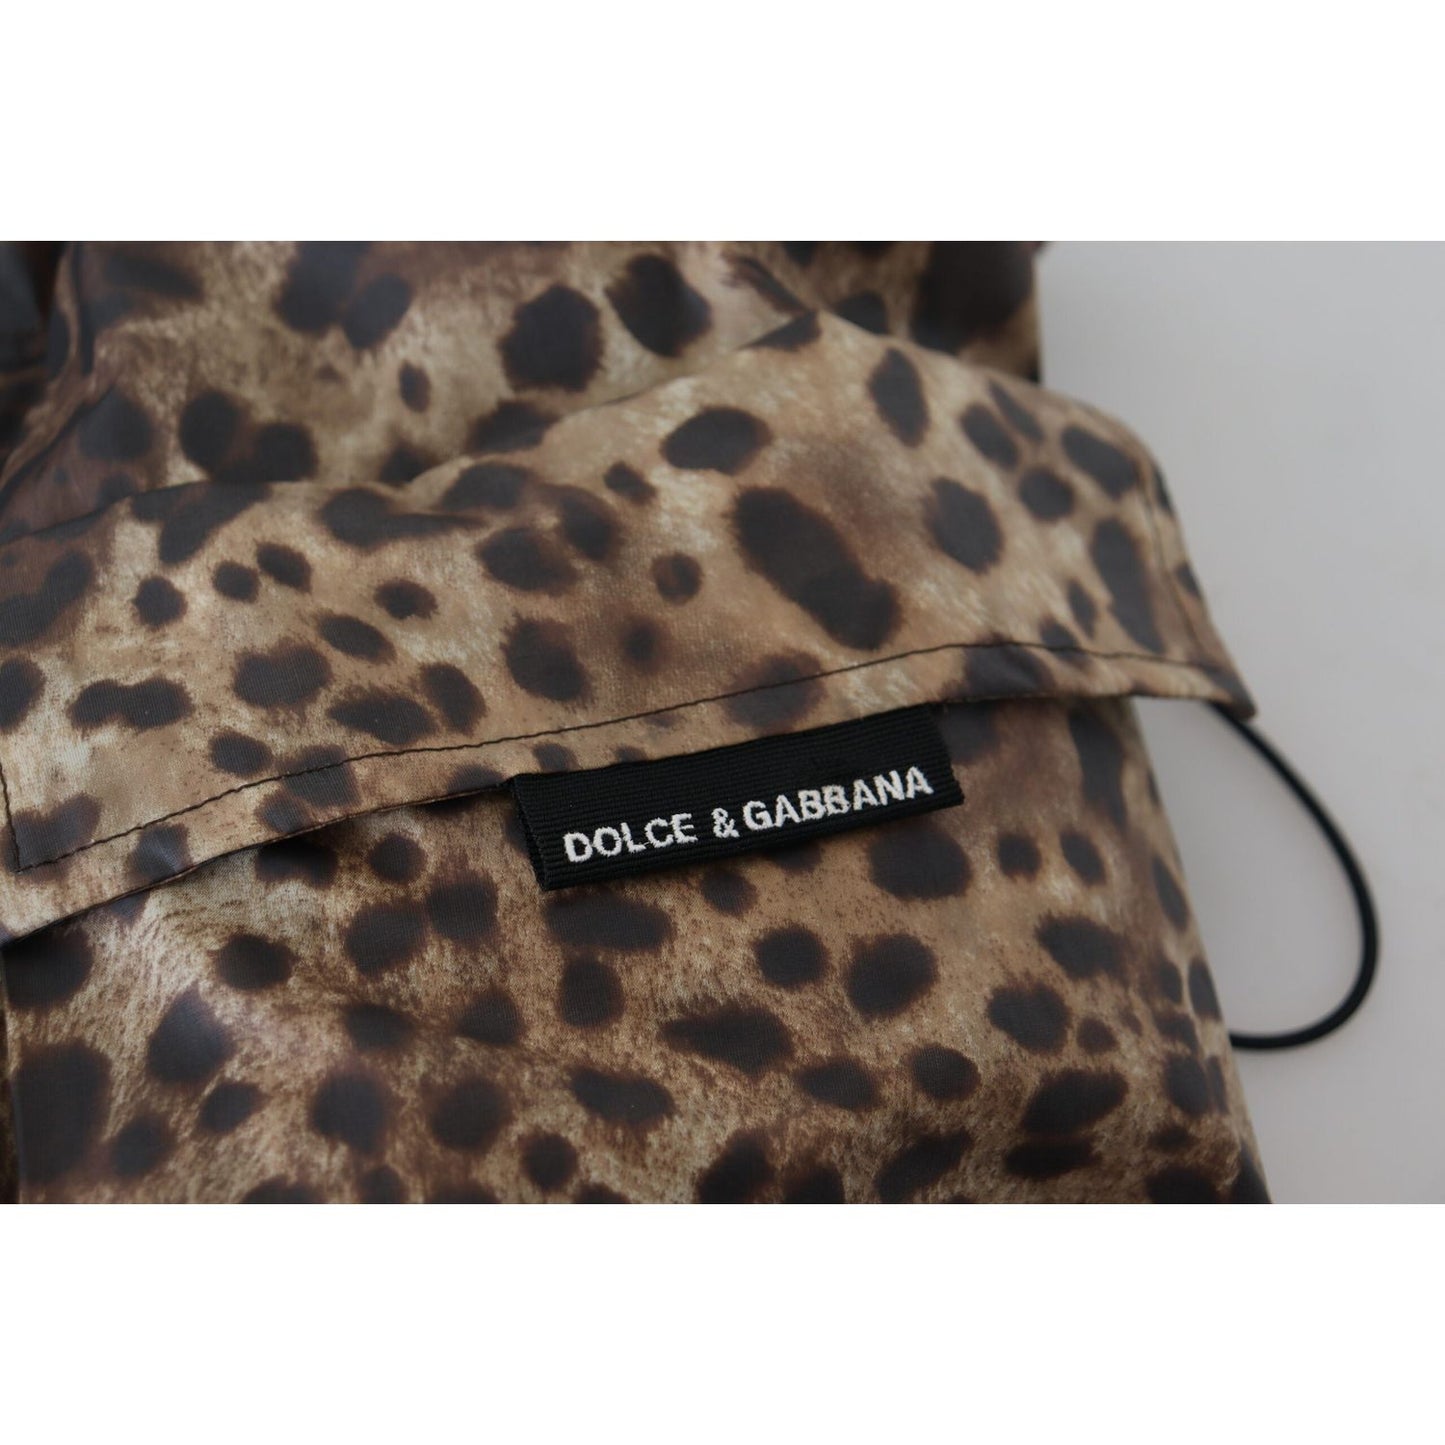 Dolce & Gabbana Elegant Leopard Print Hooded Jacket brown-leopard-print-men-hooded-jacket IMG_4060-scaled-ec85d1de-72c.jpg